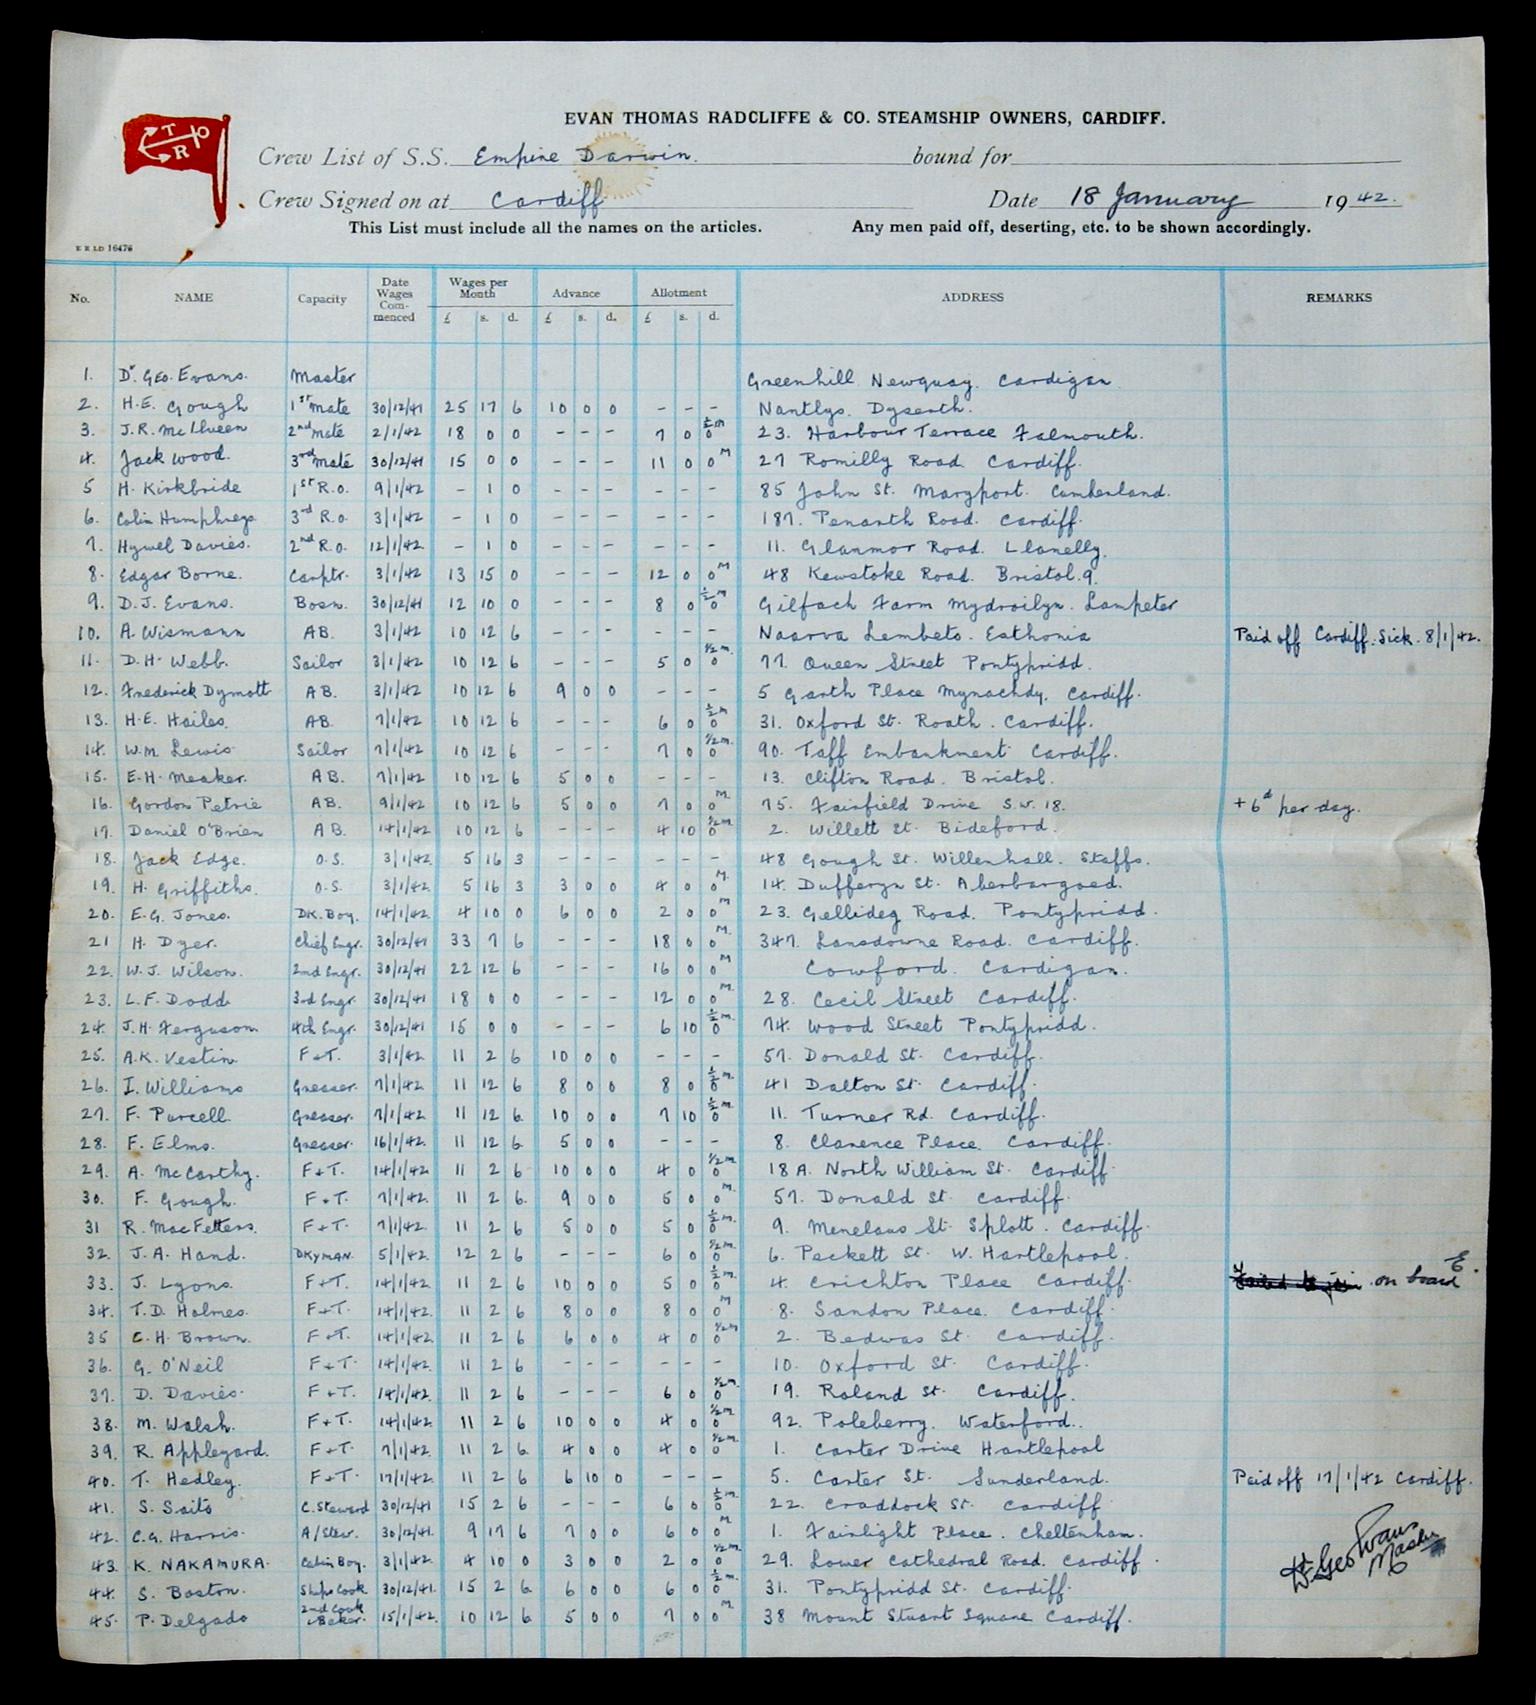 S.S. EMPIRE DARWIN, crew list